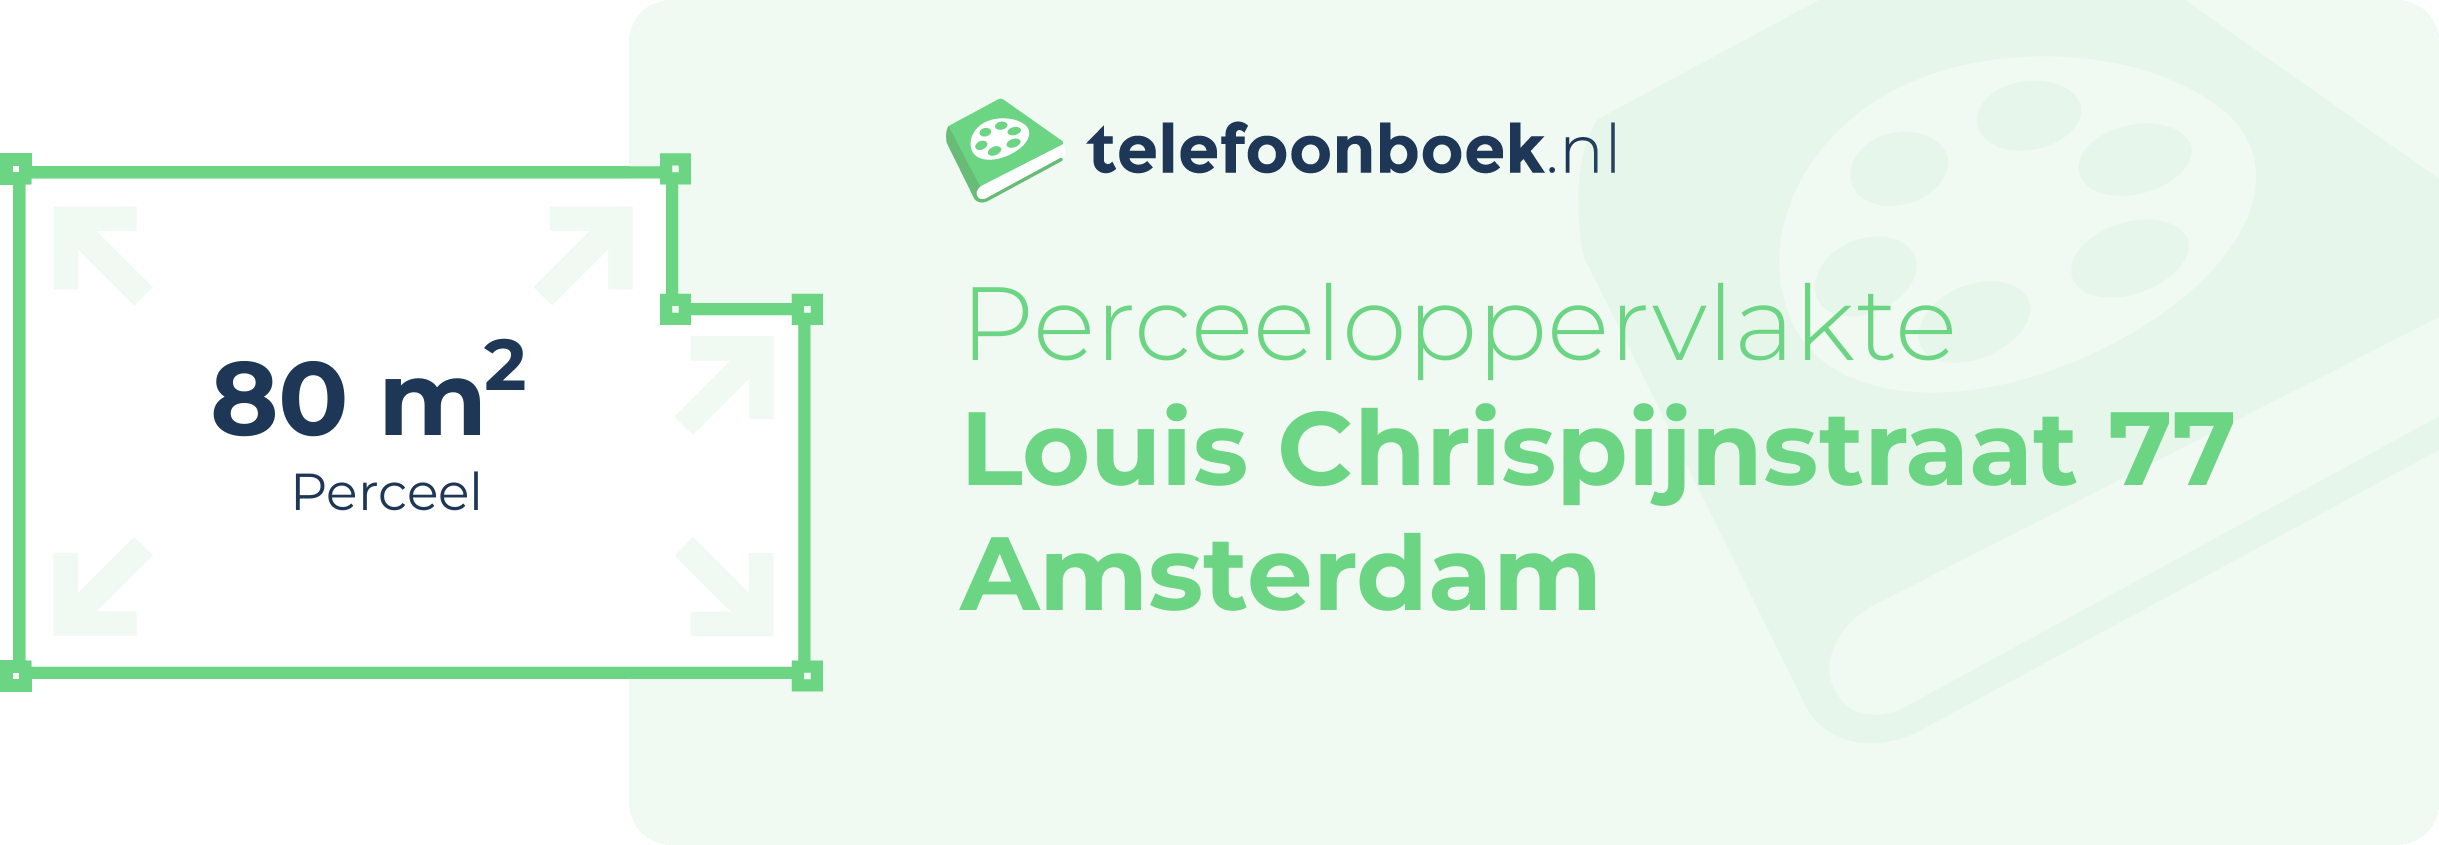 Perceeloppervlakte Louis Chrispijnstraat 77 Amsterdam